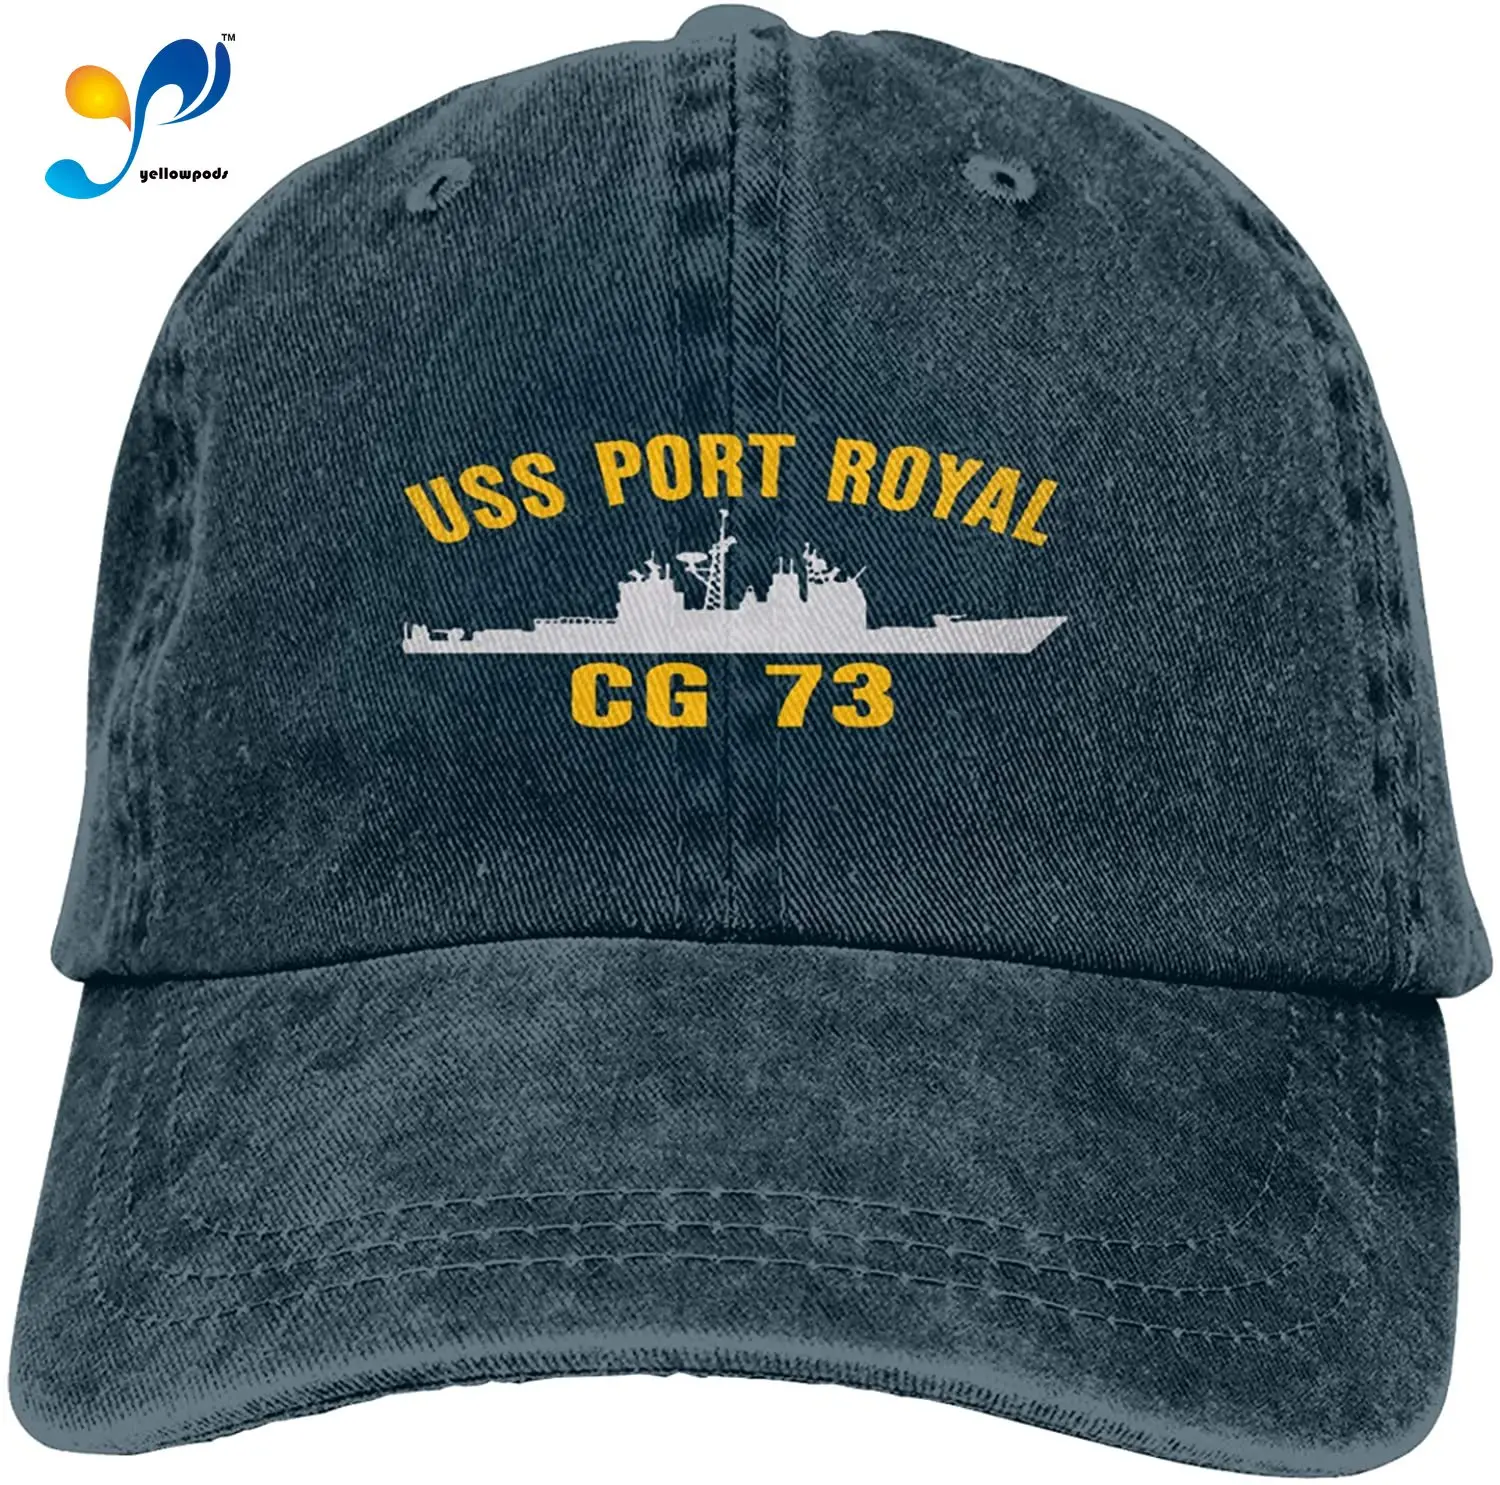 

USS Port Royal Cg 73 Sandwich Cap Denim Hats Baseball Cap Adult Cowboy Hat